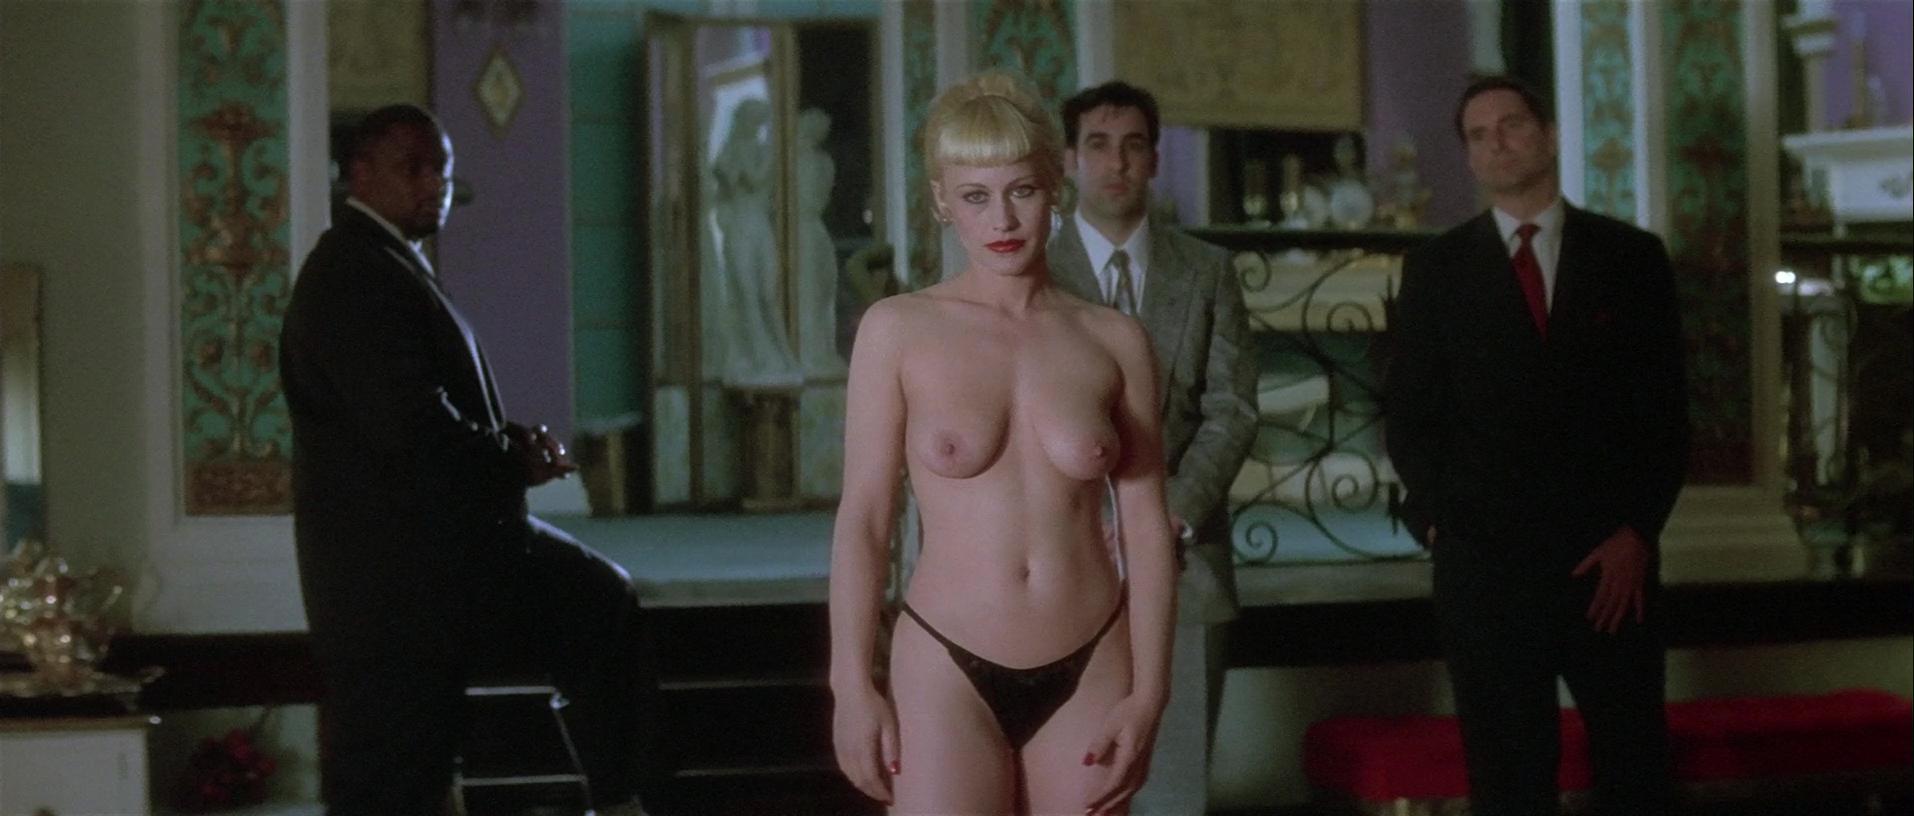 Patricia Arquette nude - Lost Highway (1997)